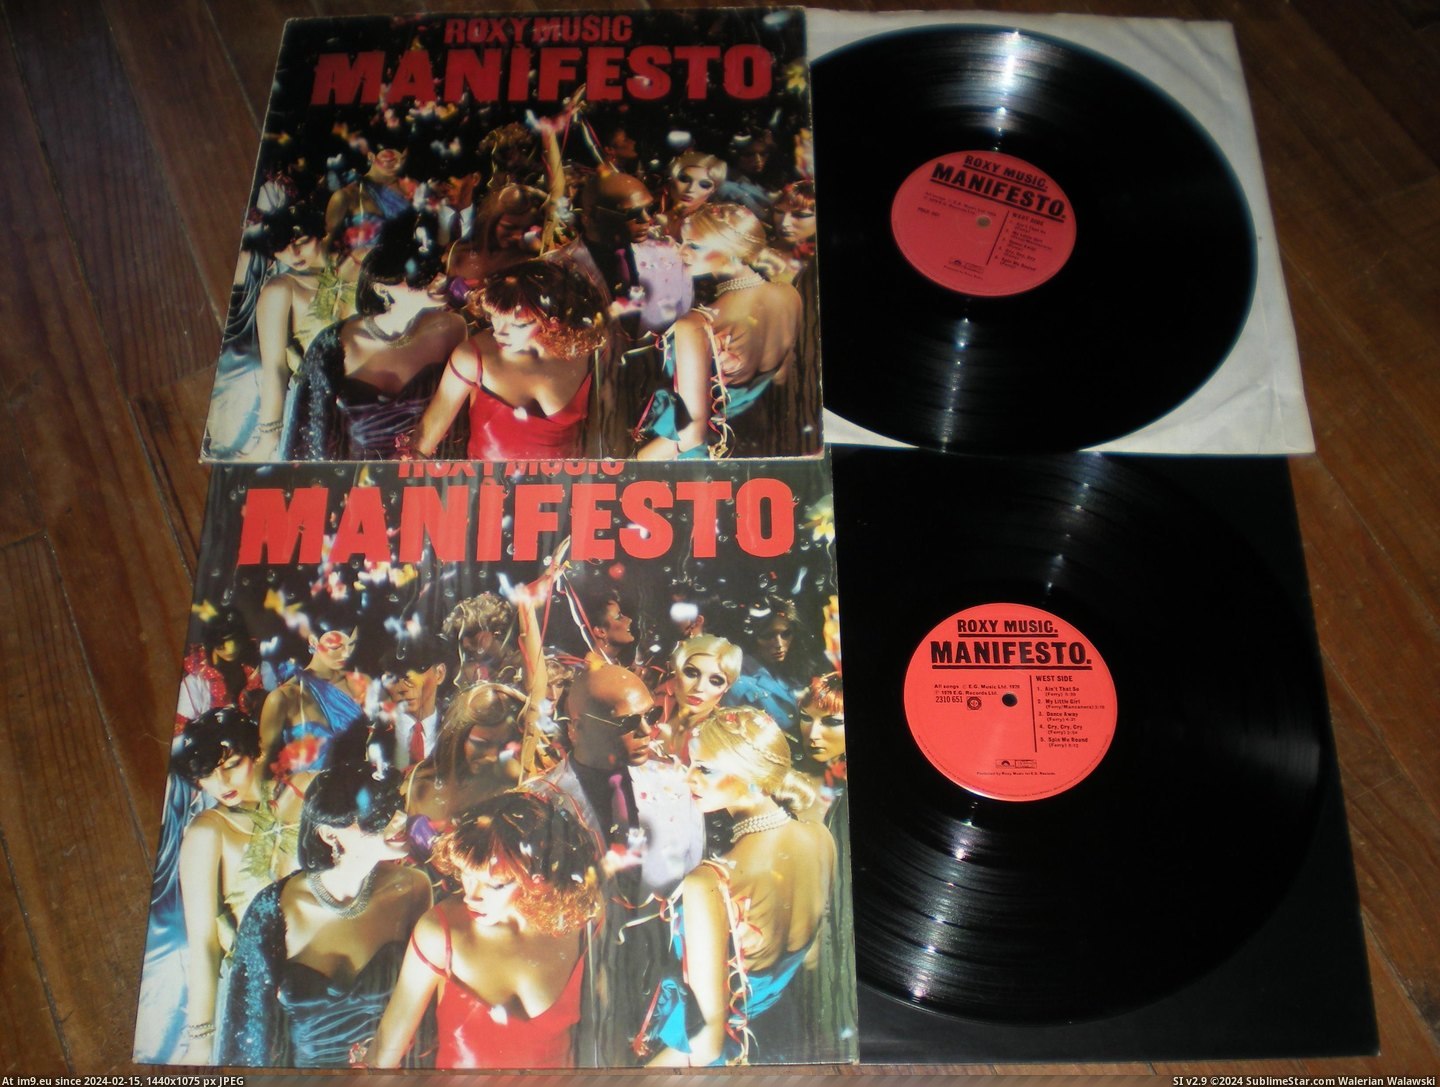  #Manifesto  Manifesto 1 Pic. (Изображение из альбом new 1))